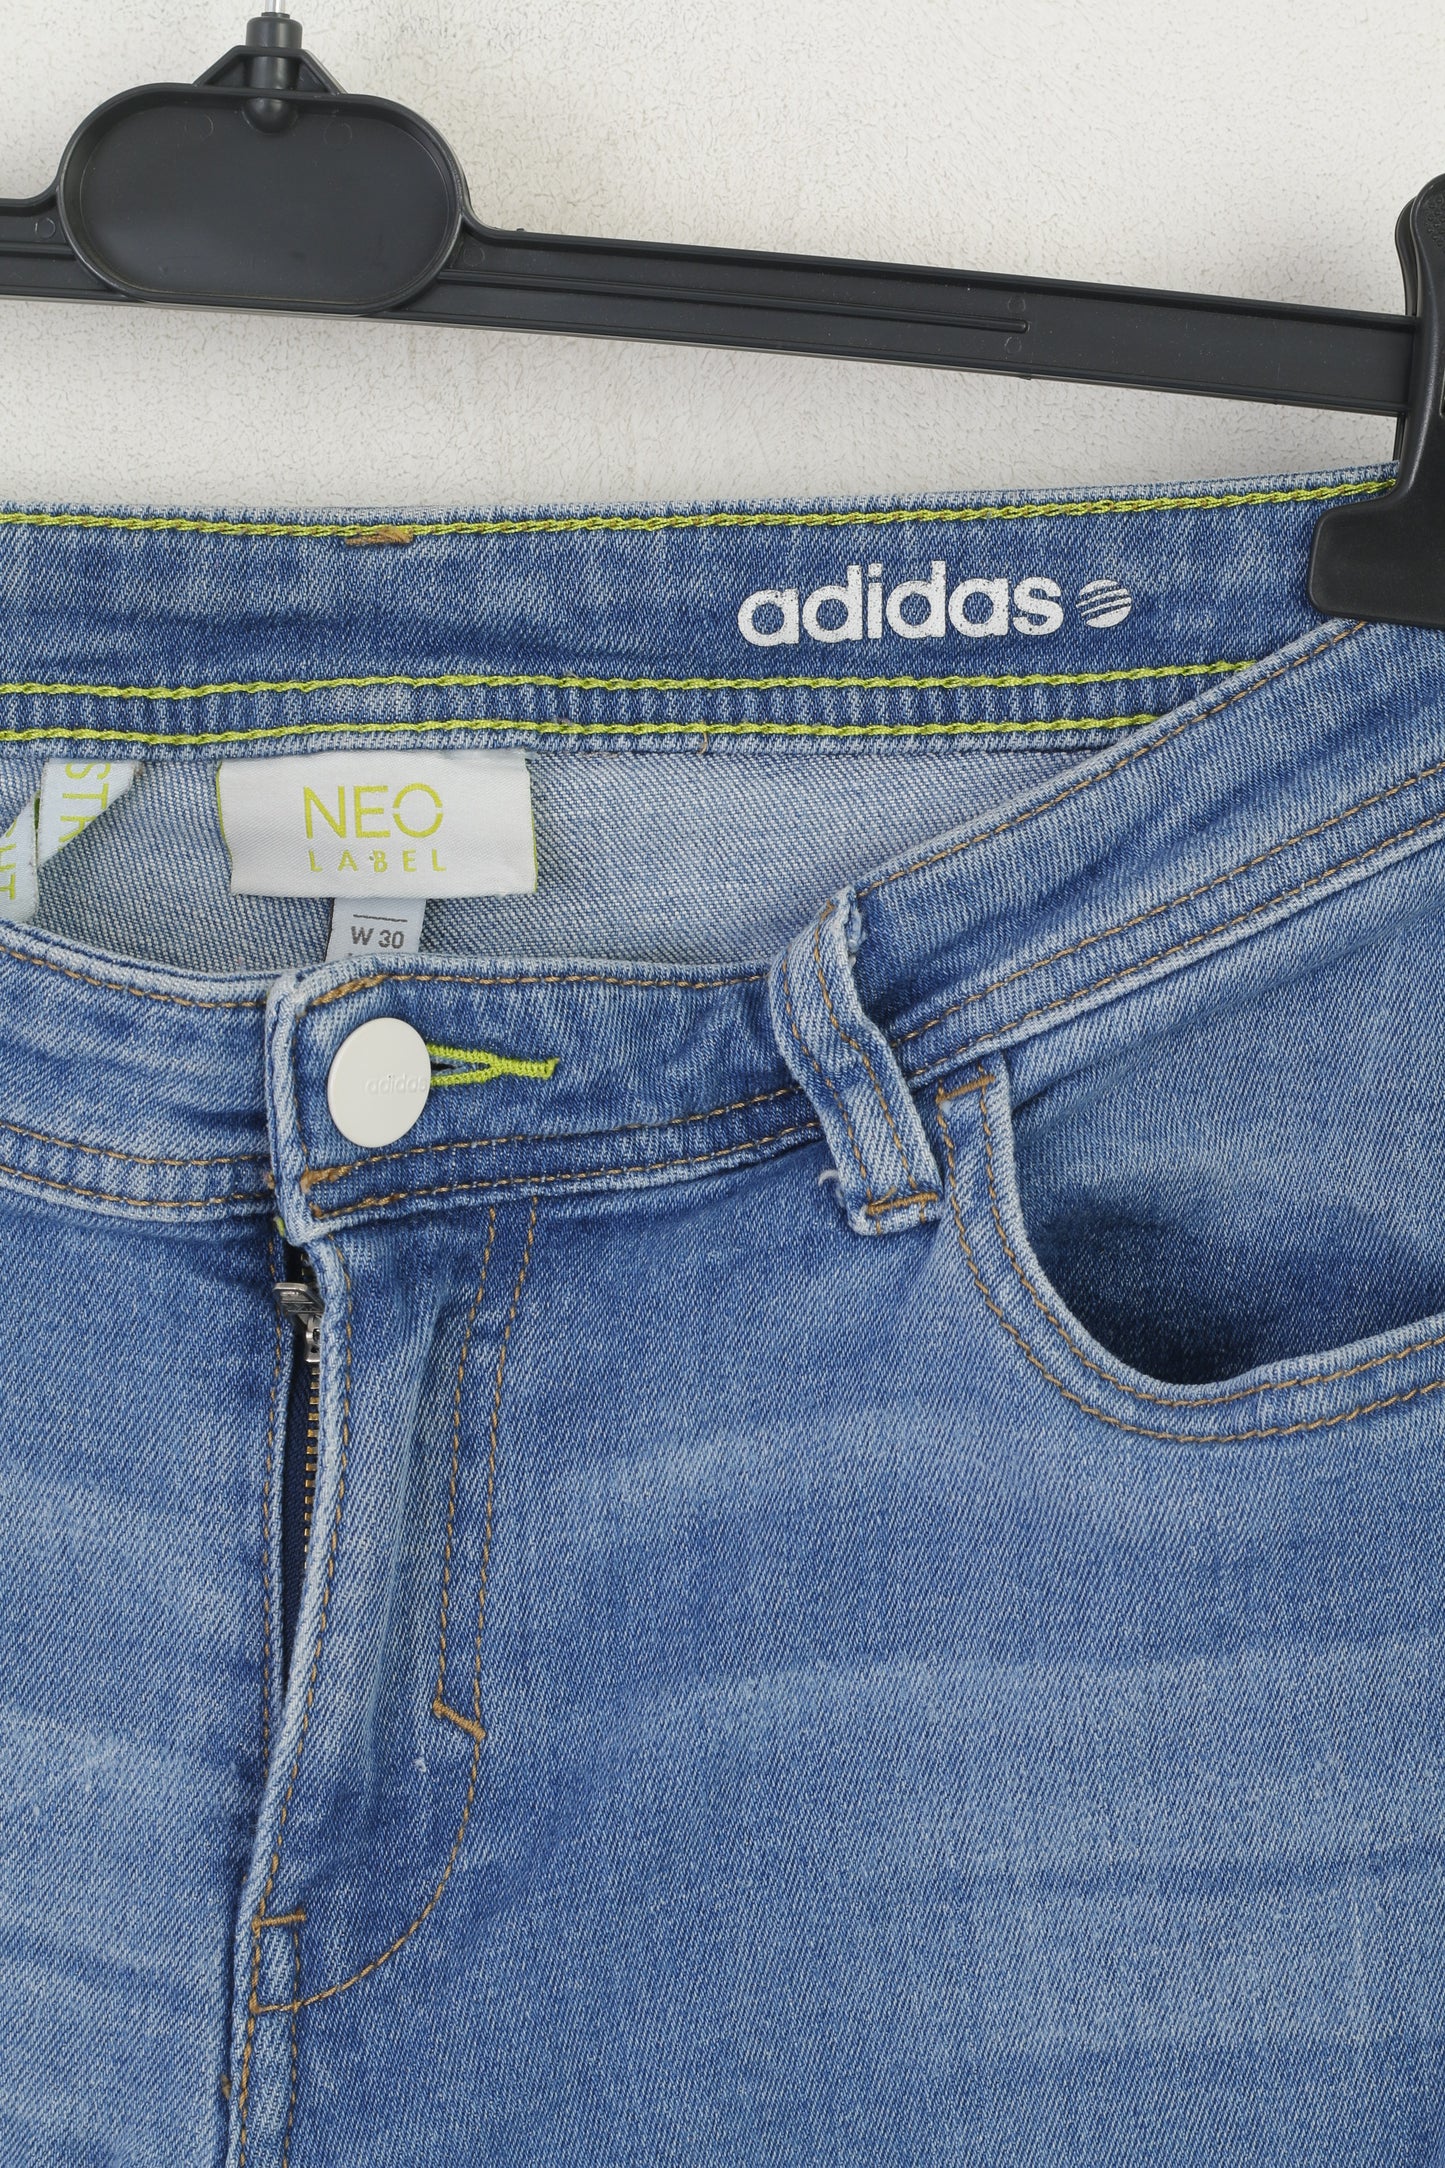 Adidas Neo Label Women 30 Jeans Trousers Blue Cotton Straight Leg Stretch Pants